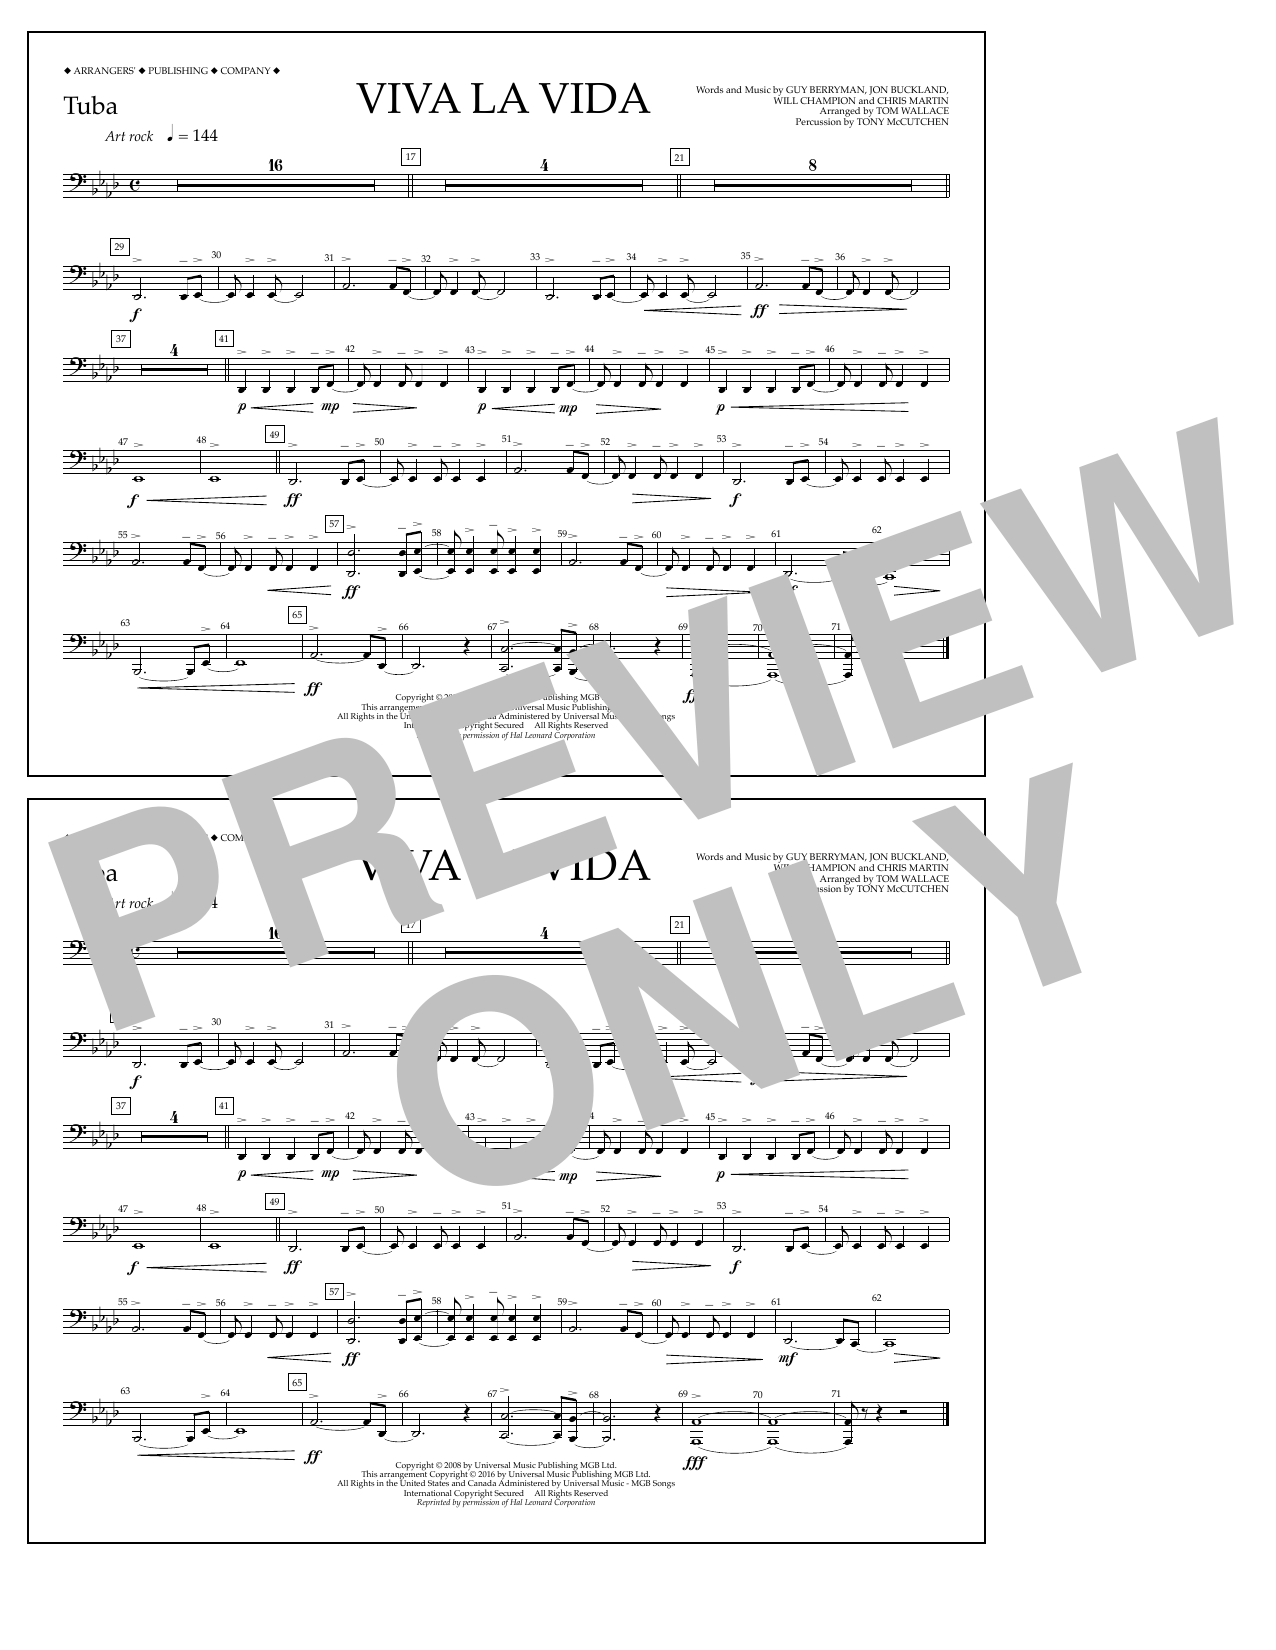 Tom Wallace Viva La Vida - Tuba sheet music notes and chords arranged for Marching Band